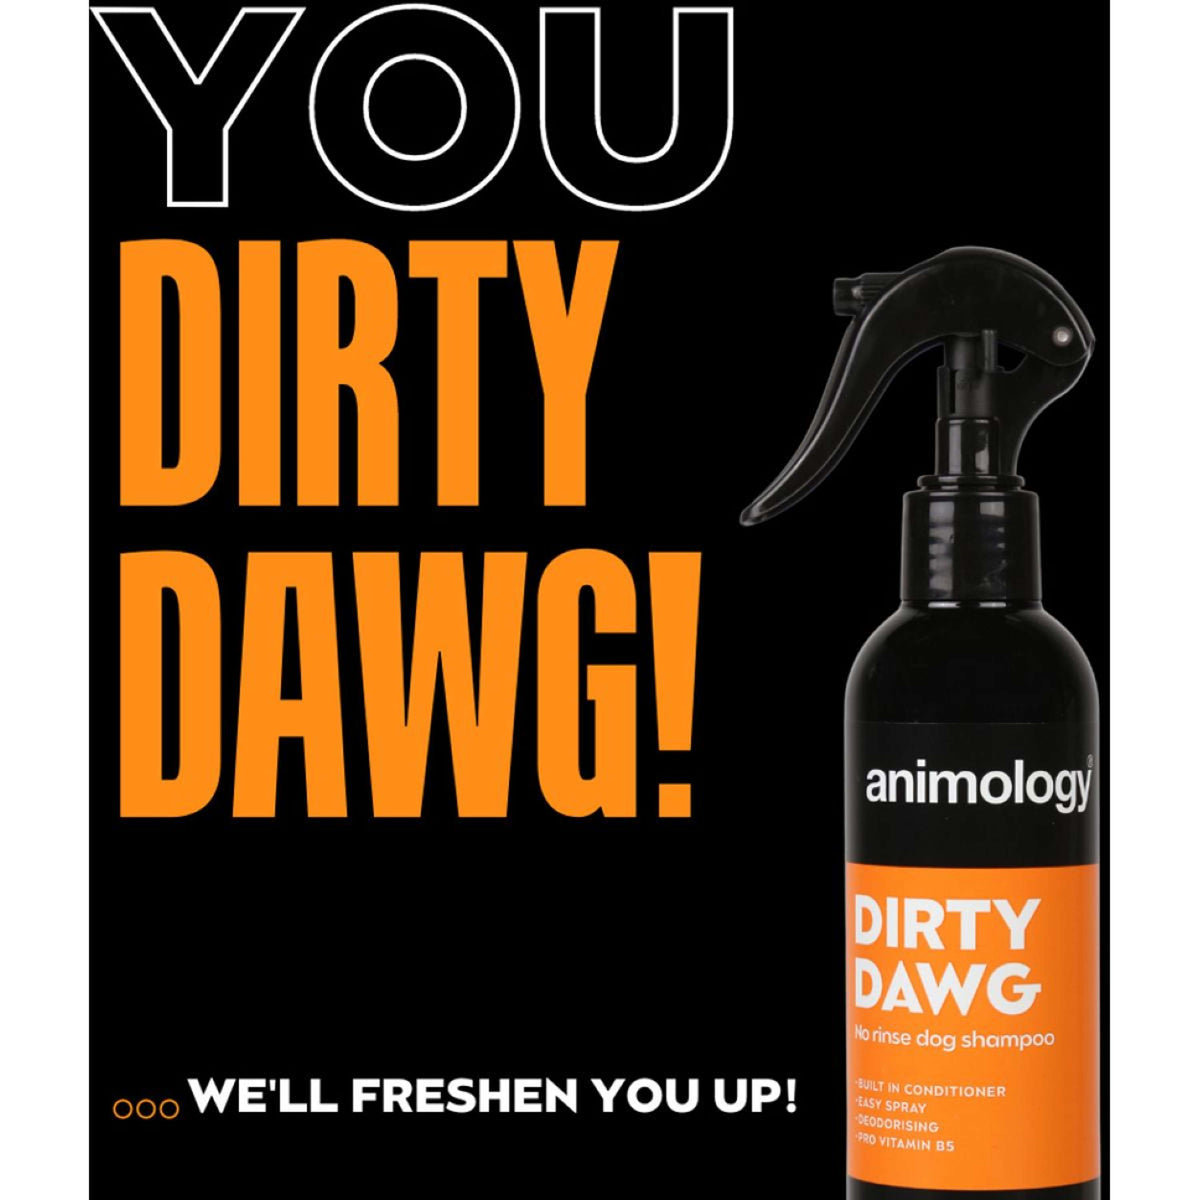 Animology Shampoo Spray Dirty Dawg No Rinse